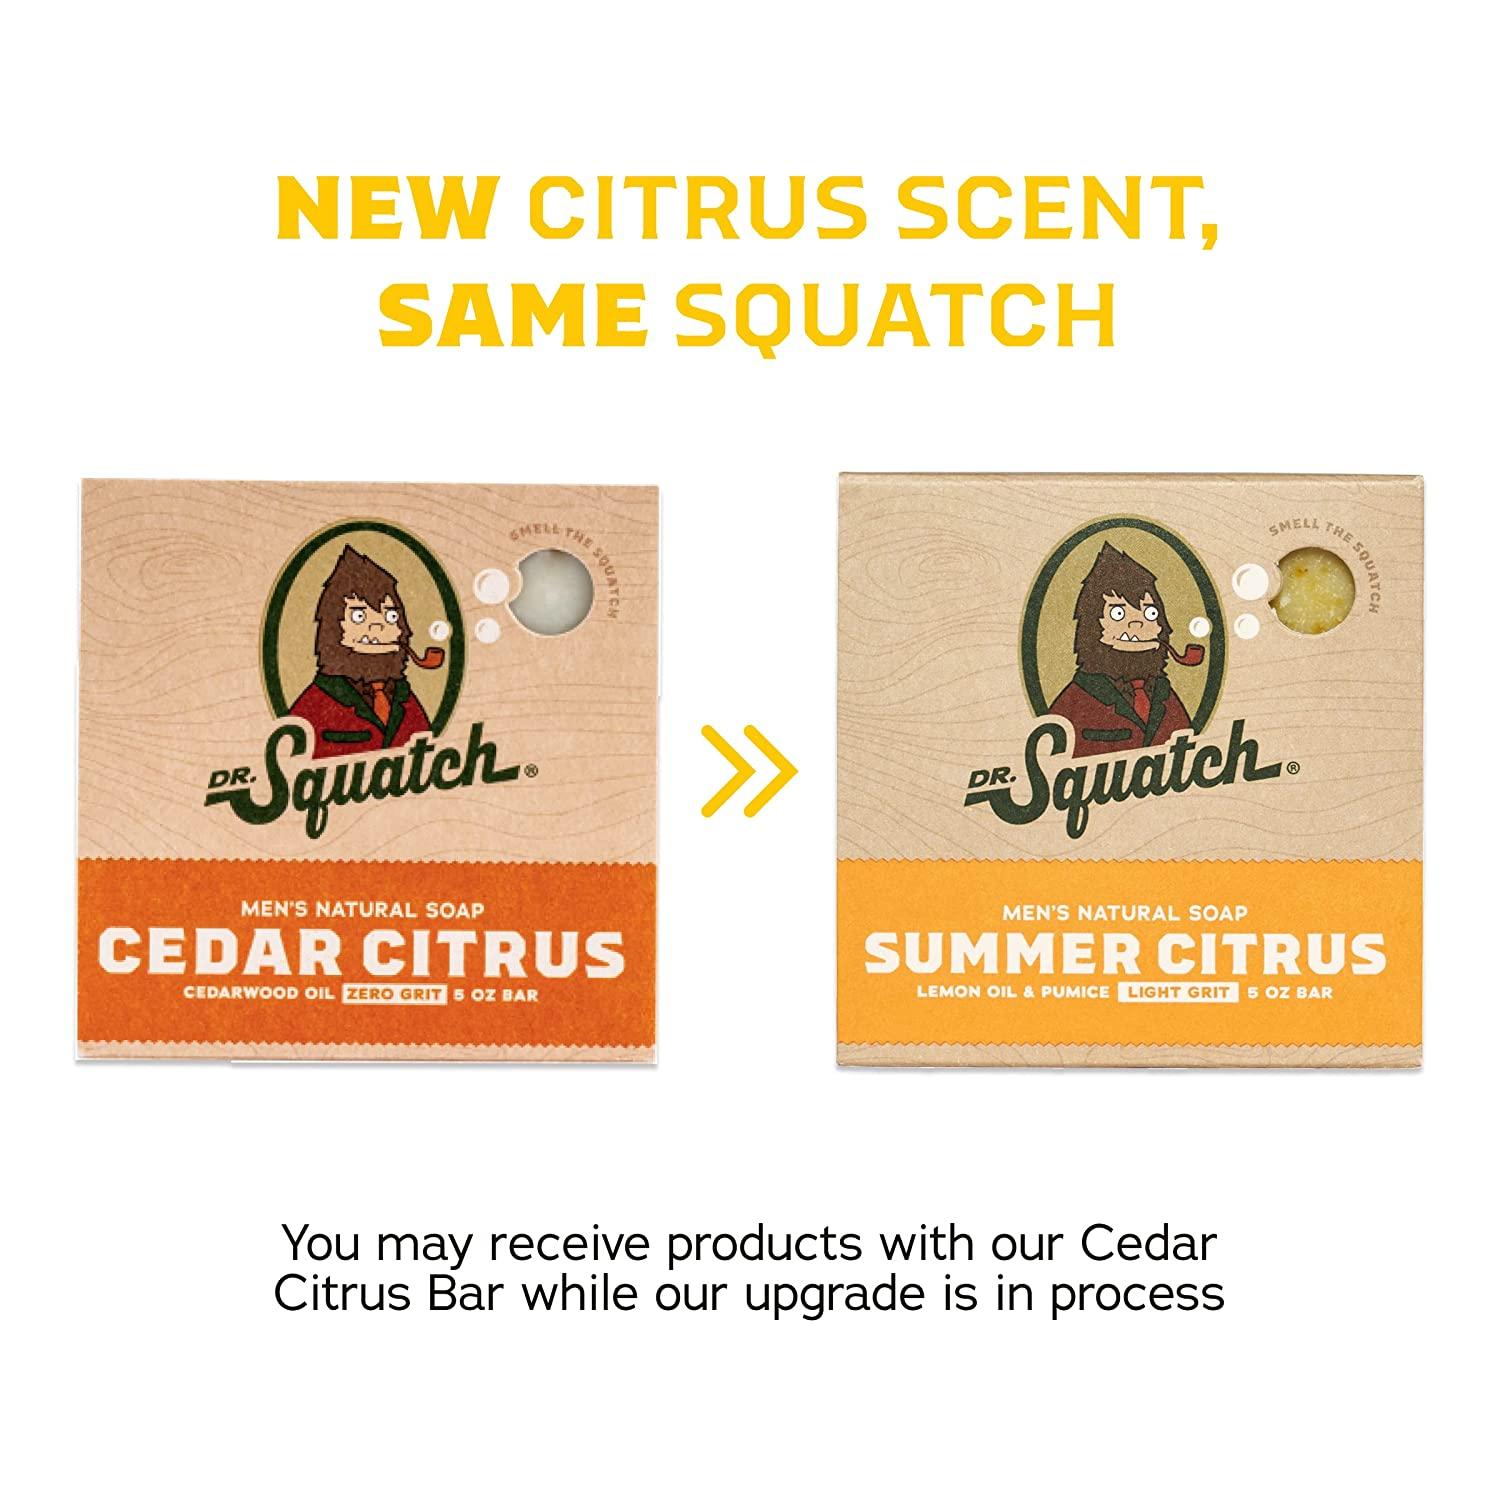 Dr. Squatch DISCONTINUED All Natural Bar Soap for Men with Zero Grit, Cedar  Citrus